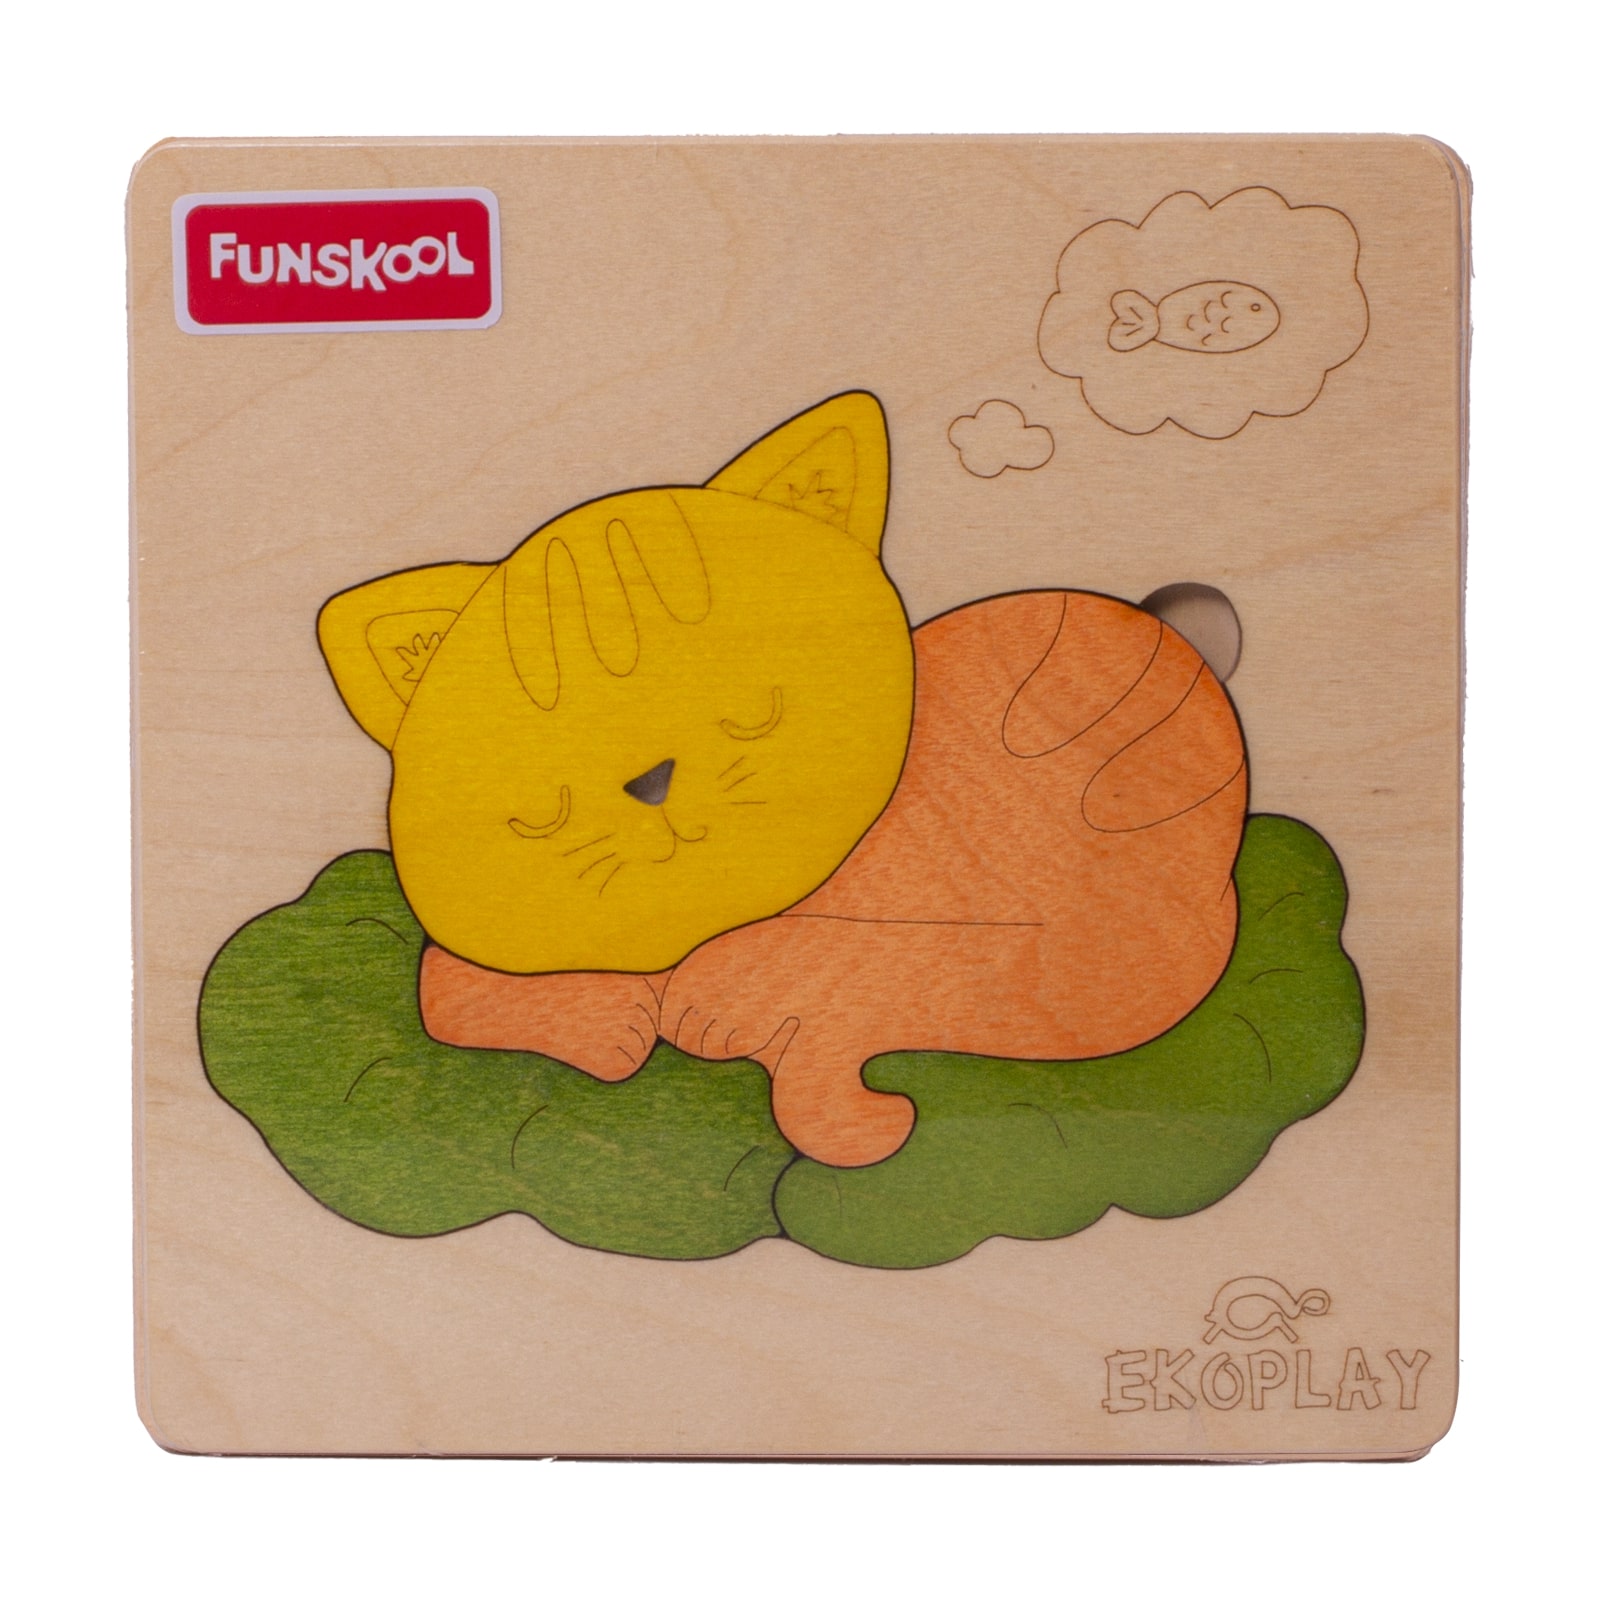 EKOPLAY-CAT ON A MAT-WOODEN PUZZLE